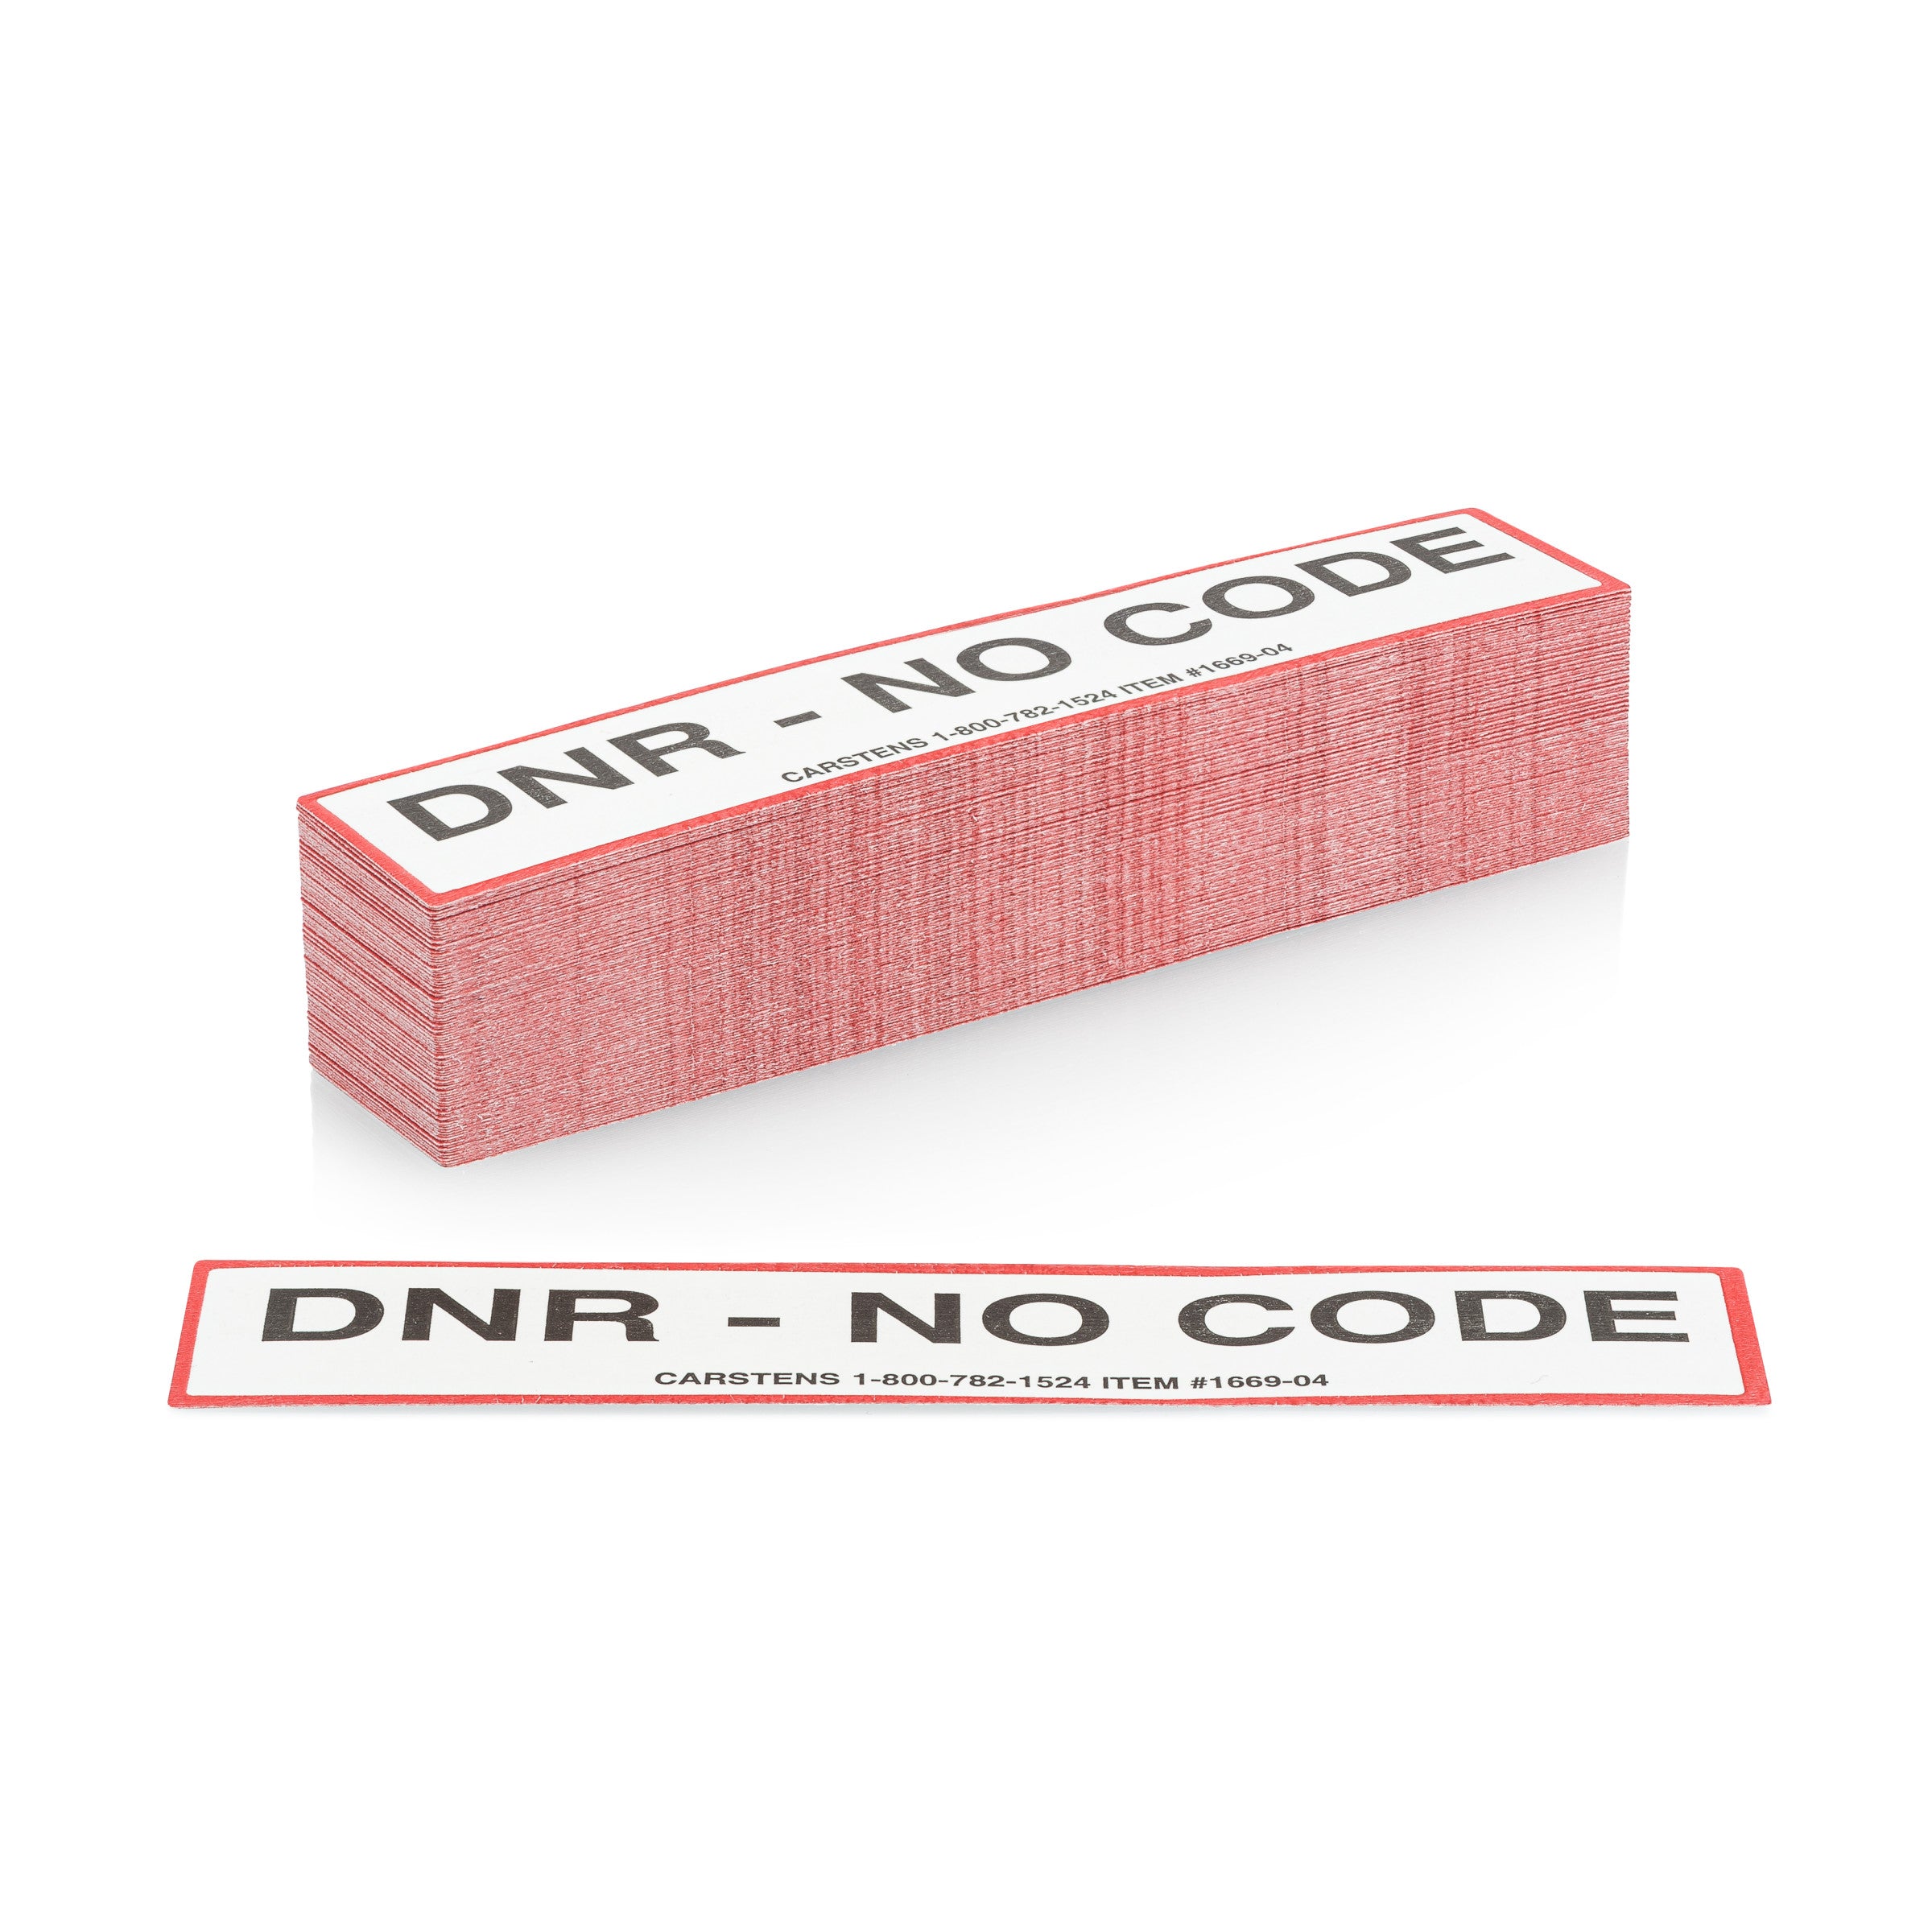 DNR - No Code Alert/Instruction Card, White, W5.25" x H1" (100 pack)